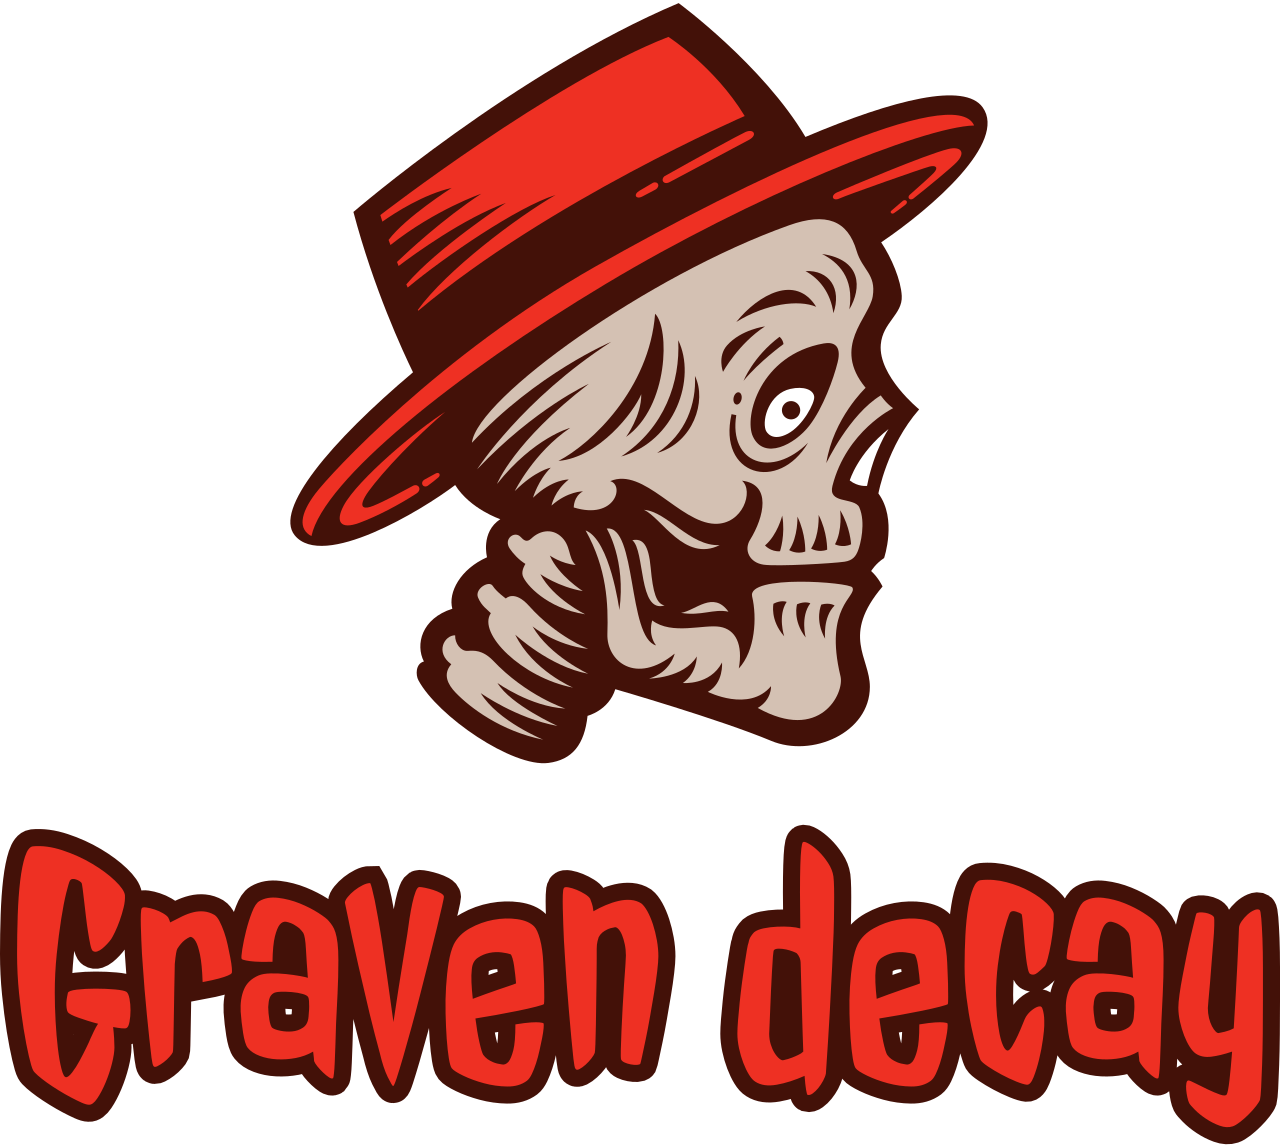 Graven decay's logo